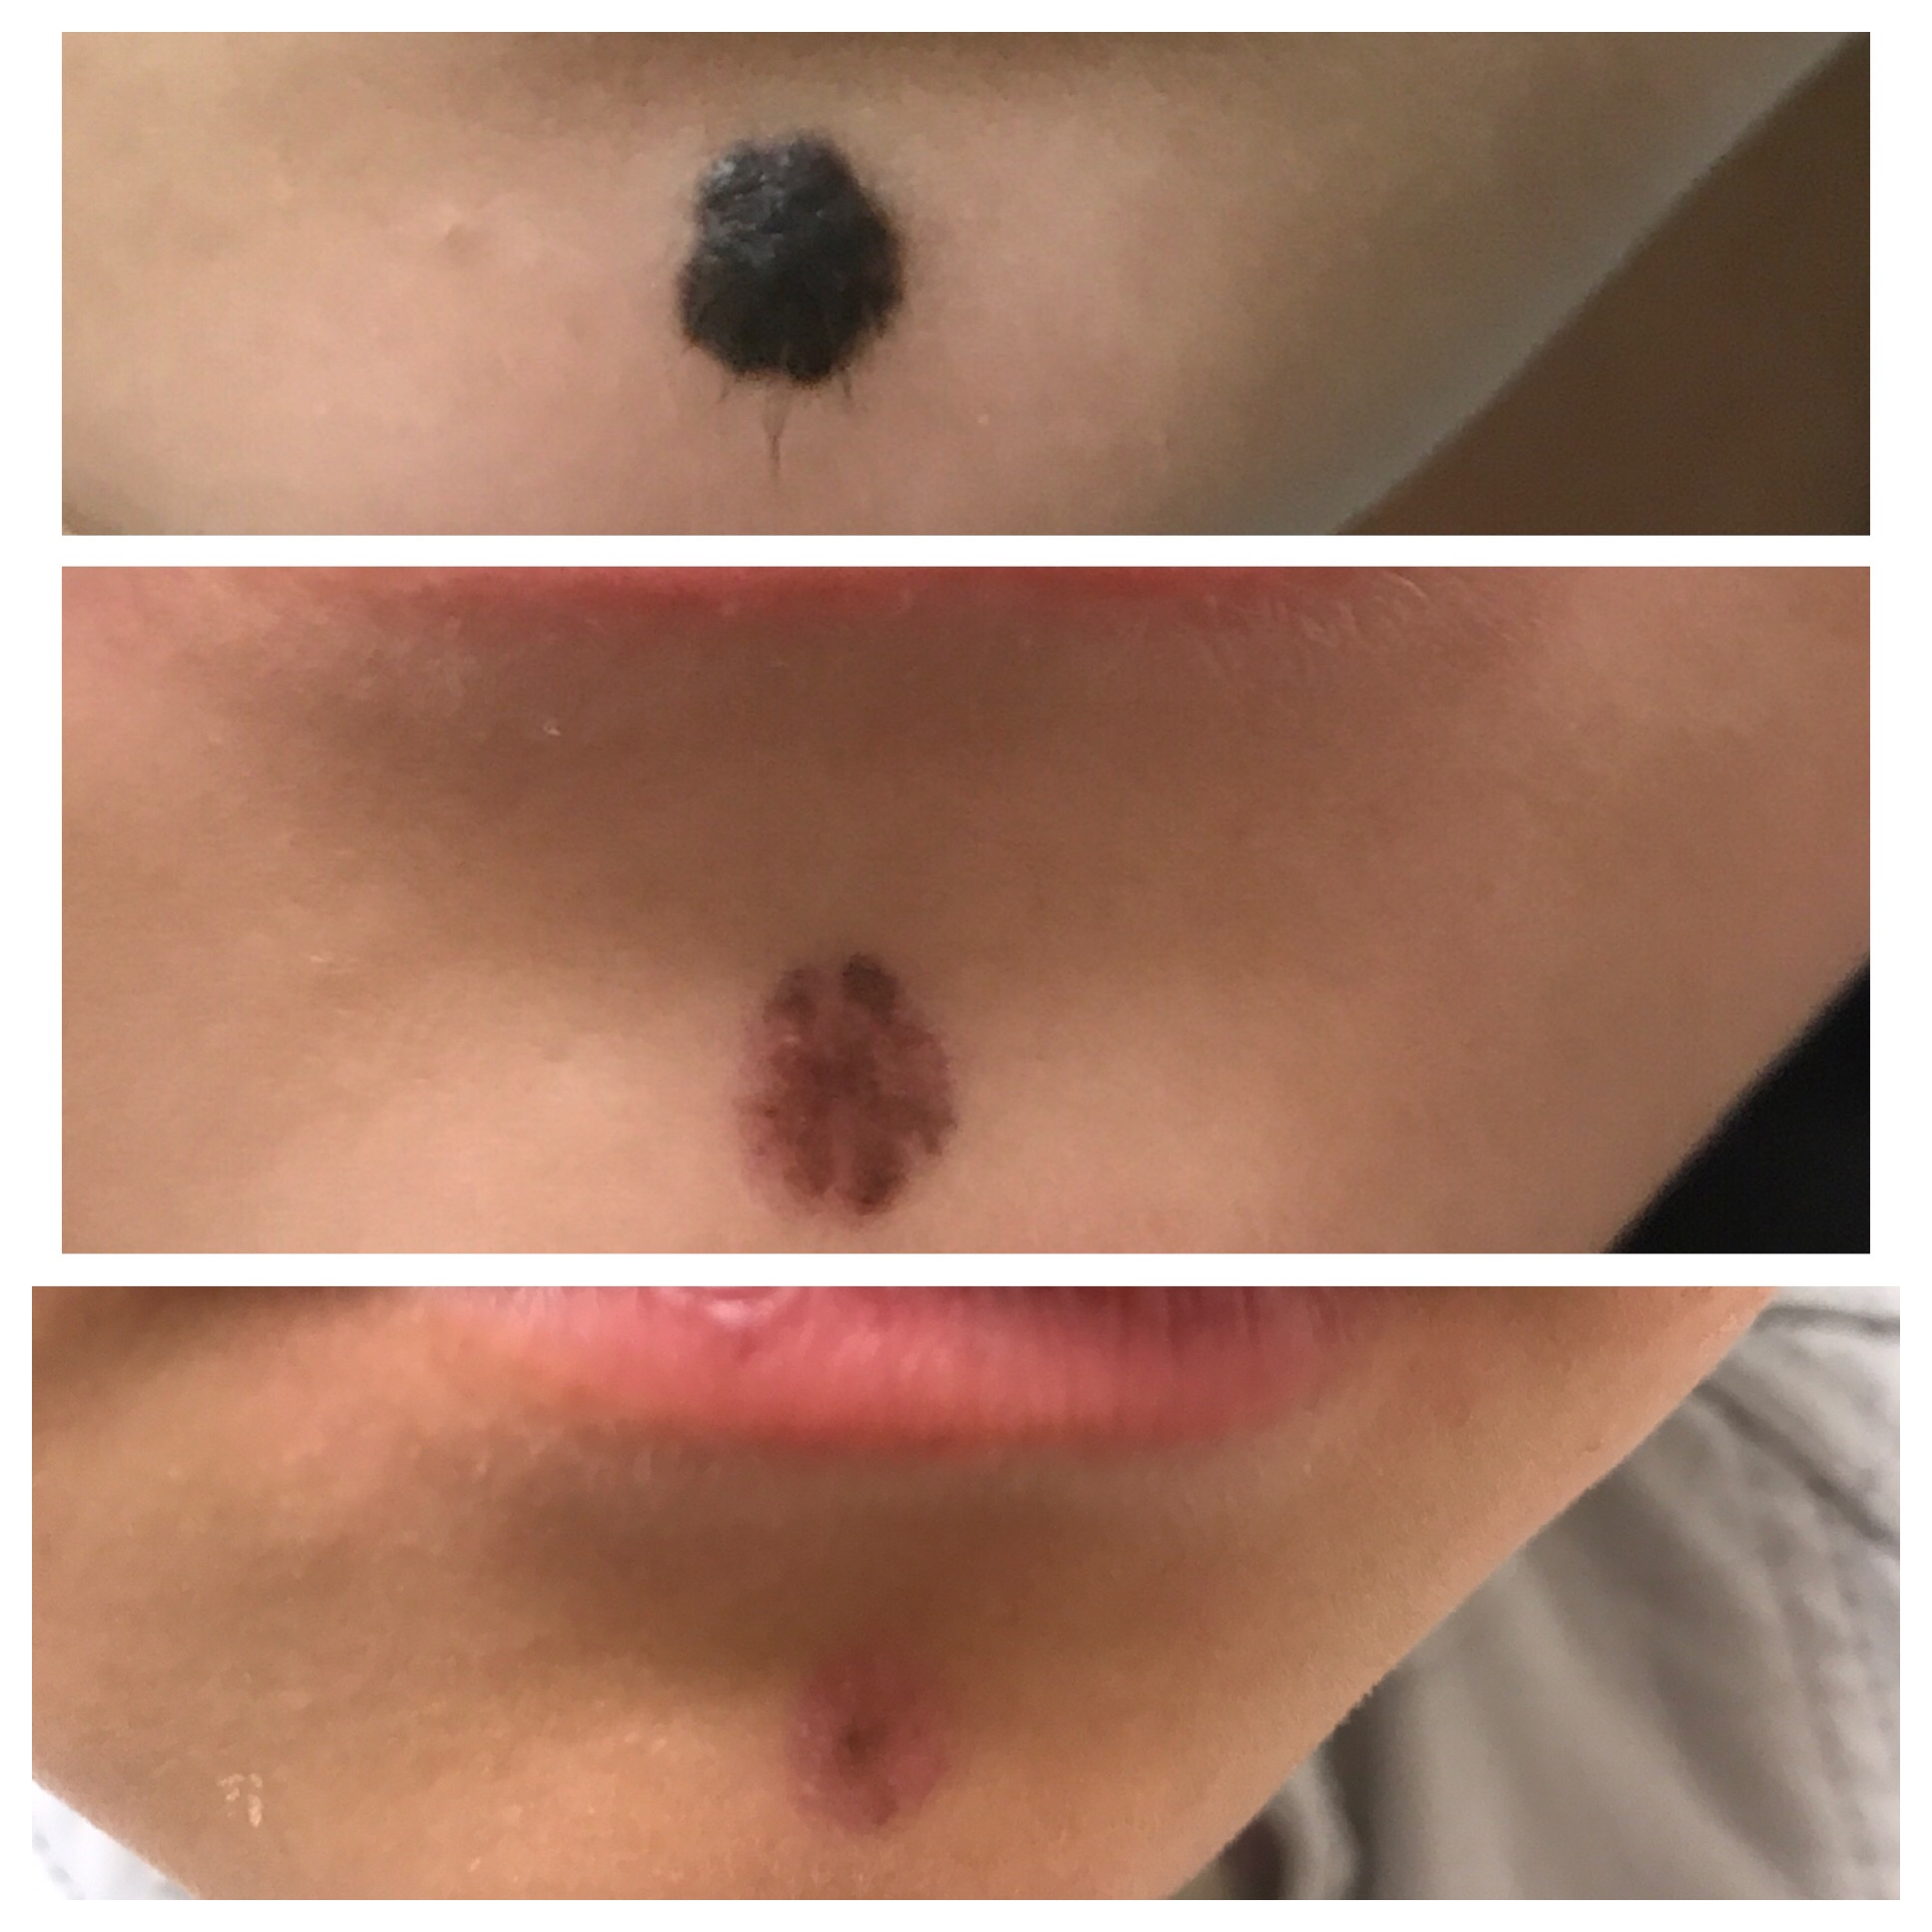 Mole Removal   Eternal Dermatology   Dermatologist